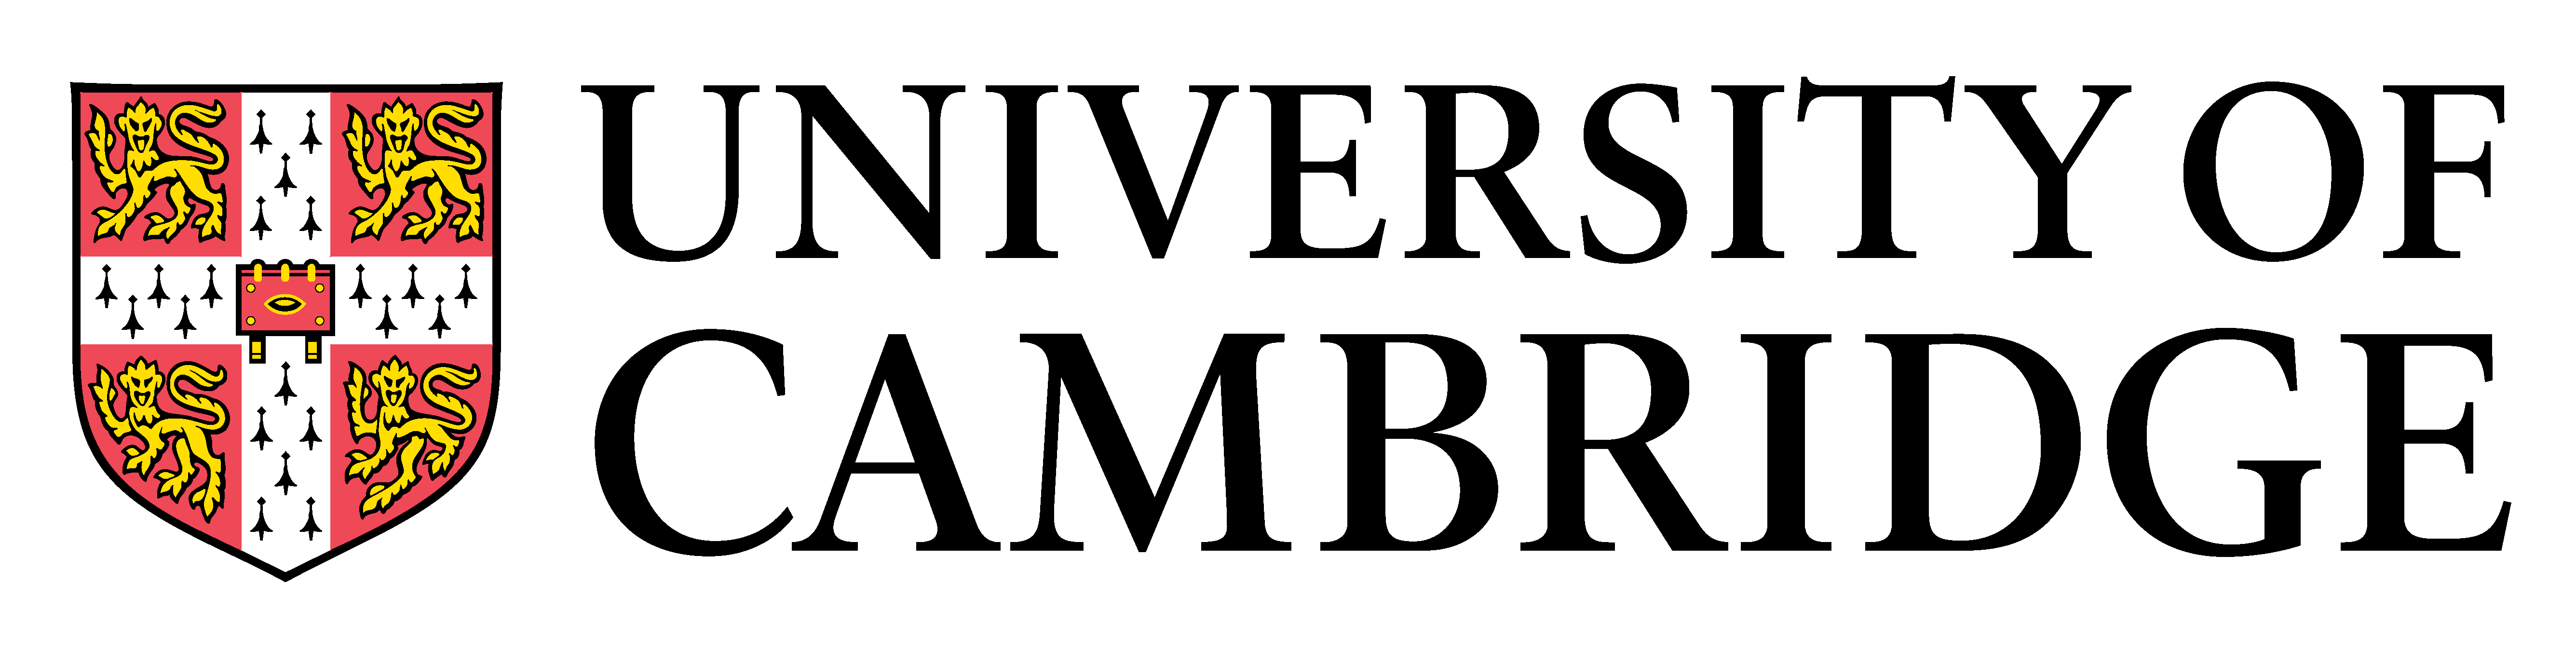 university of cambridge logo Home - 3D Laser Scanning Surveys